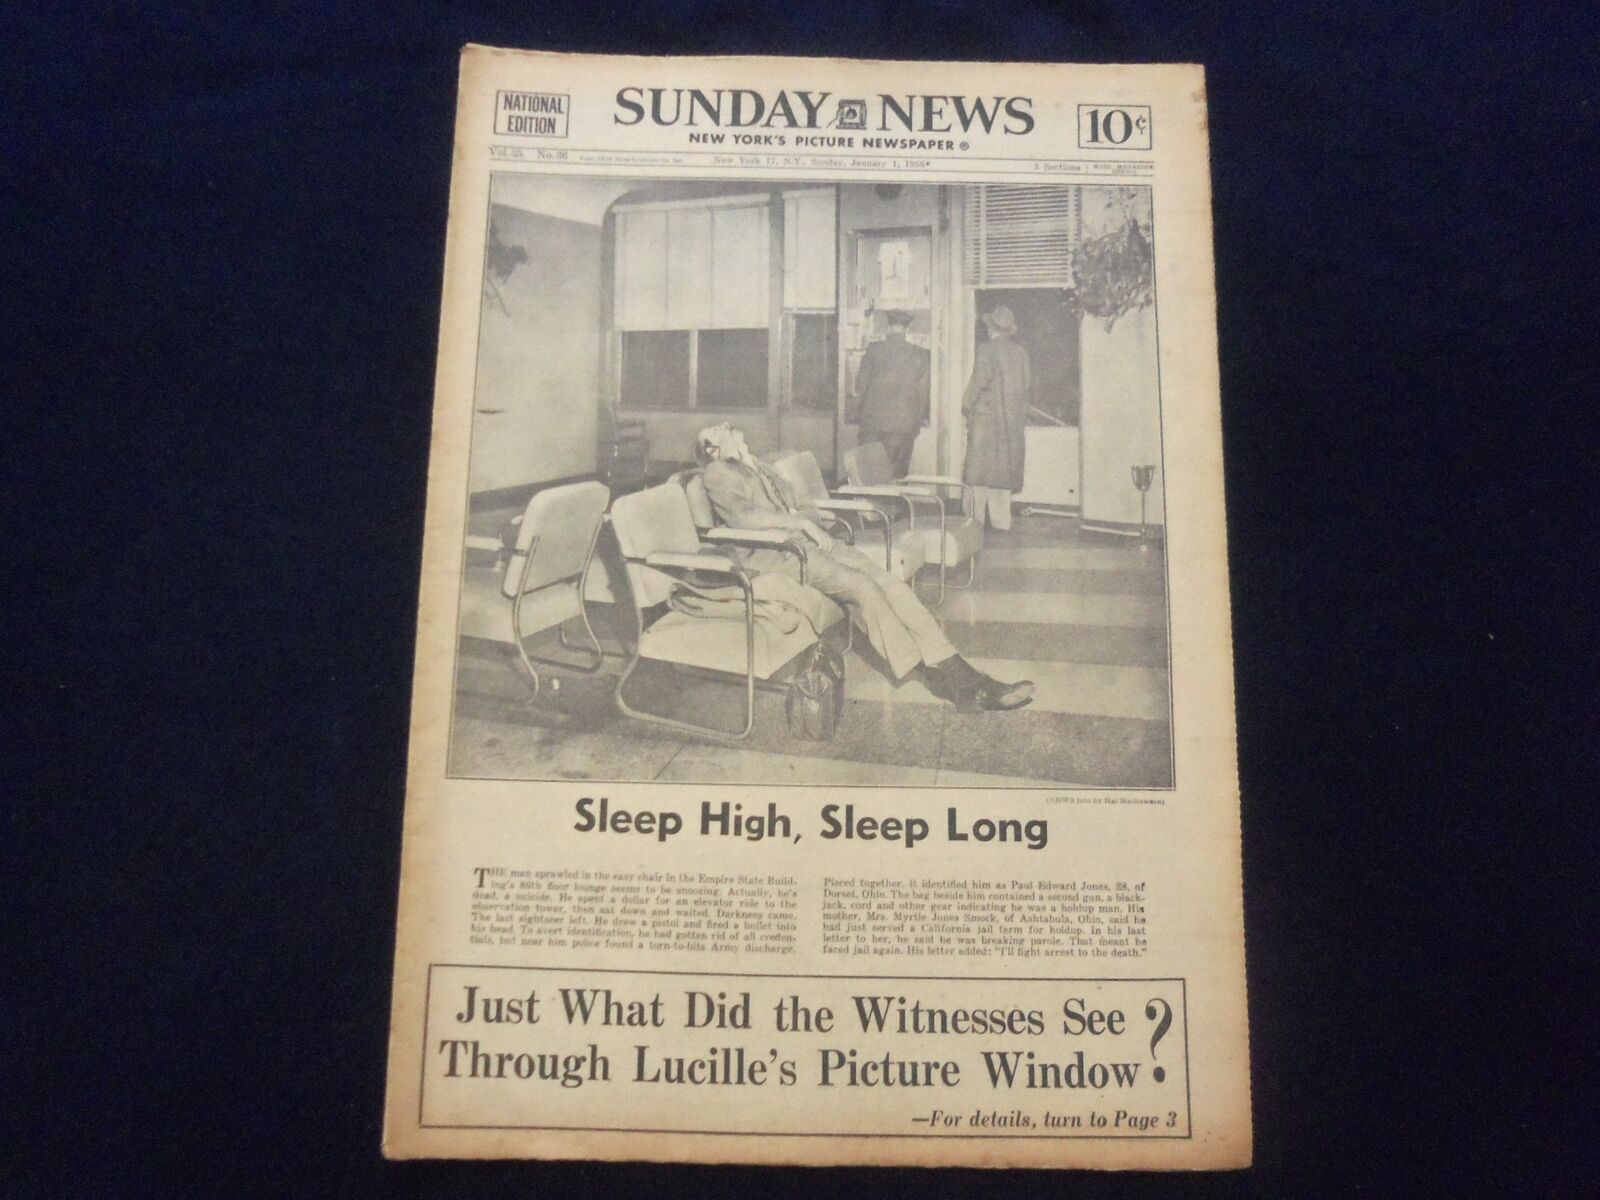 1956 JAN 1 NEW YORK SUNDAY NEWS NEWSPAPER - PAUL EDWARD JONES SUICIDE - NP 6765